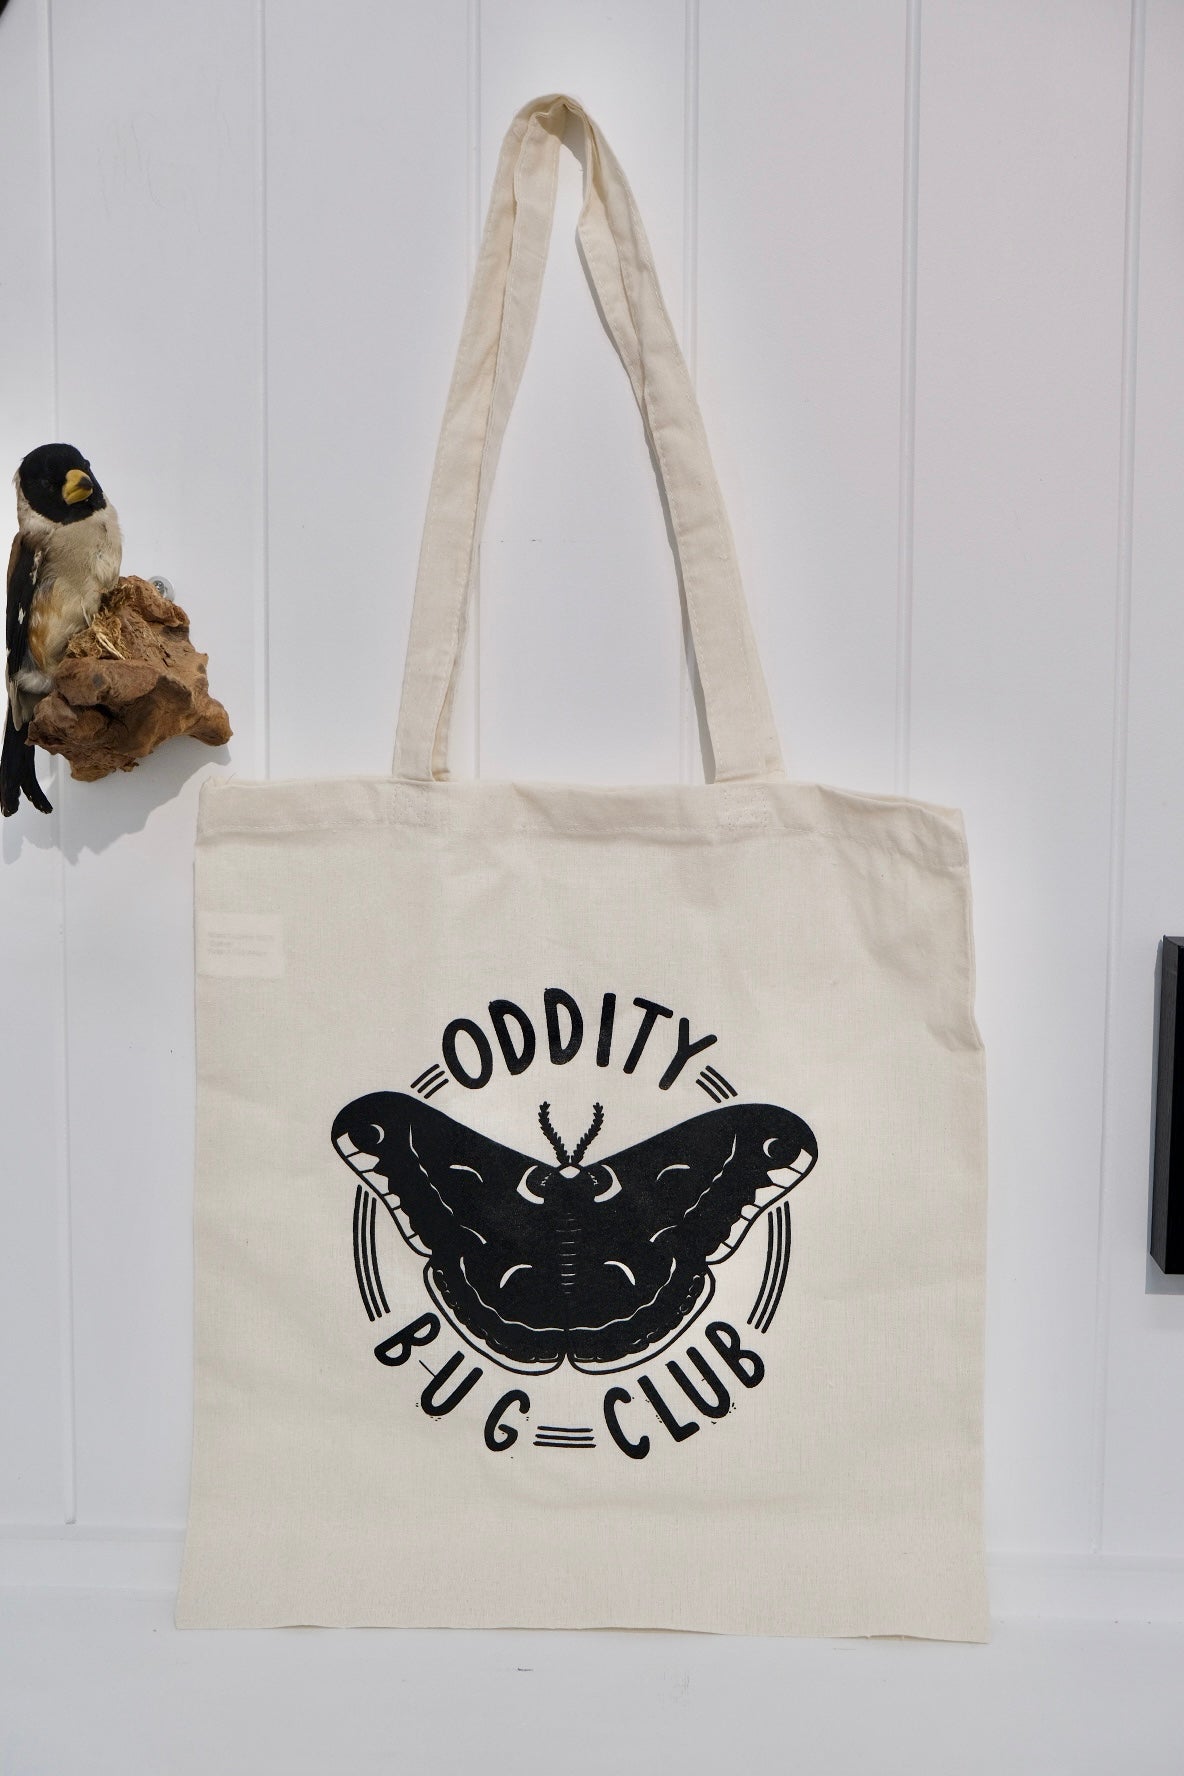 Oddity Bug Club Calico Tote Bag